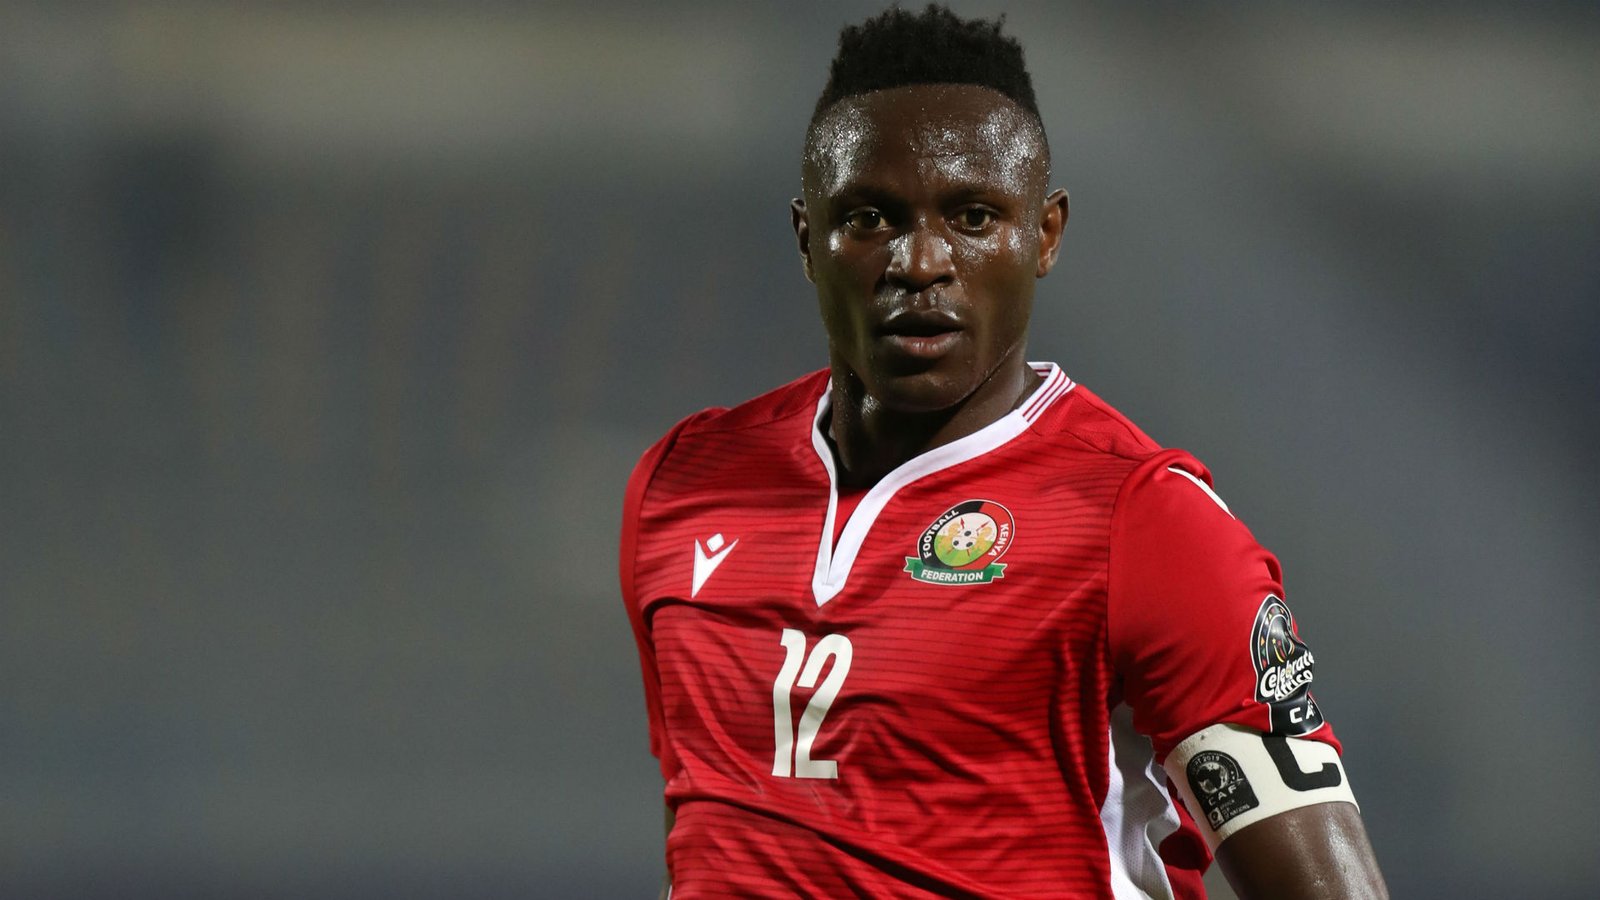 Harambee-Stars-Captain-Wanyama-retires-from-the-national-team